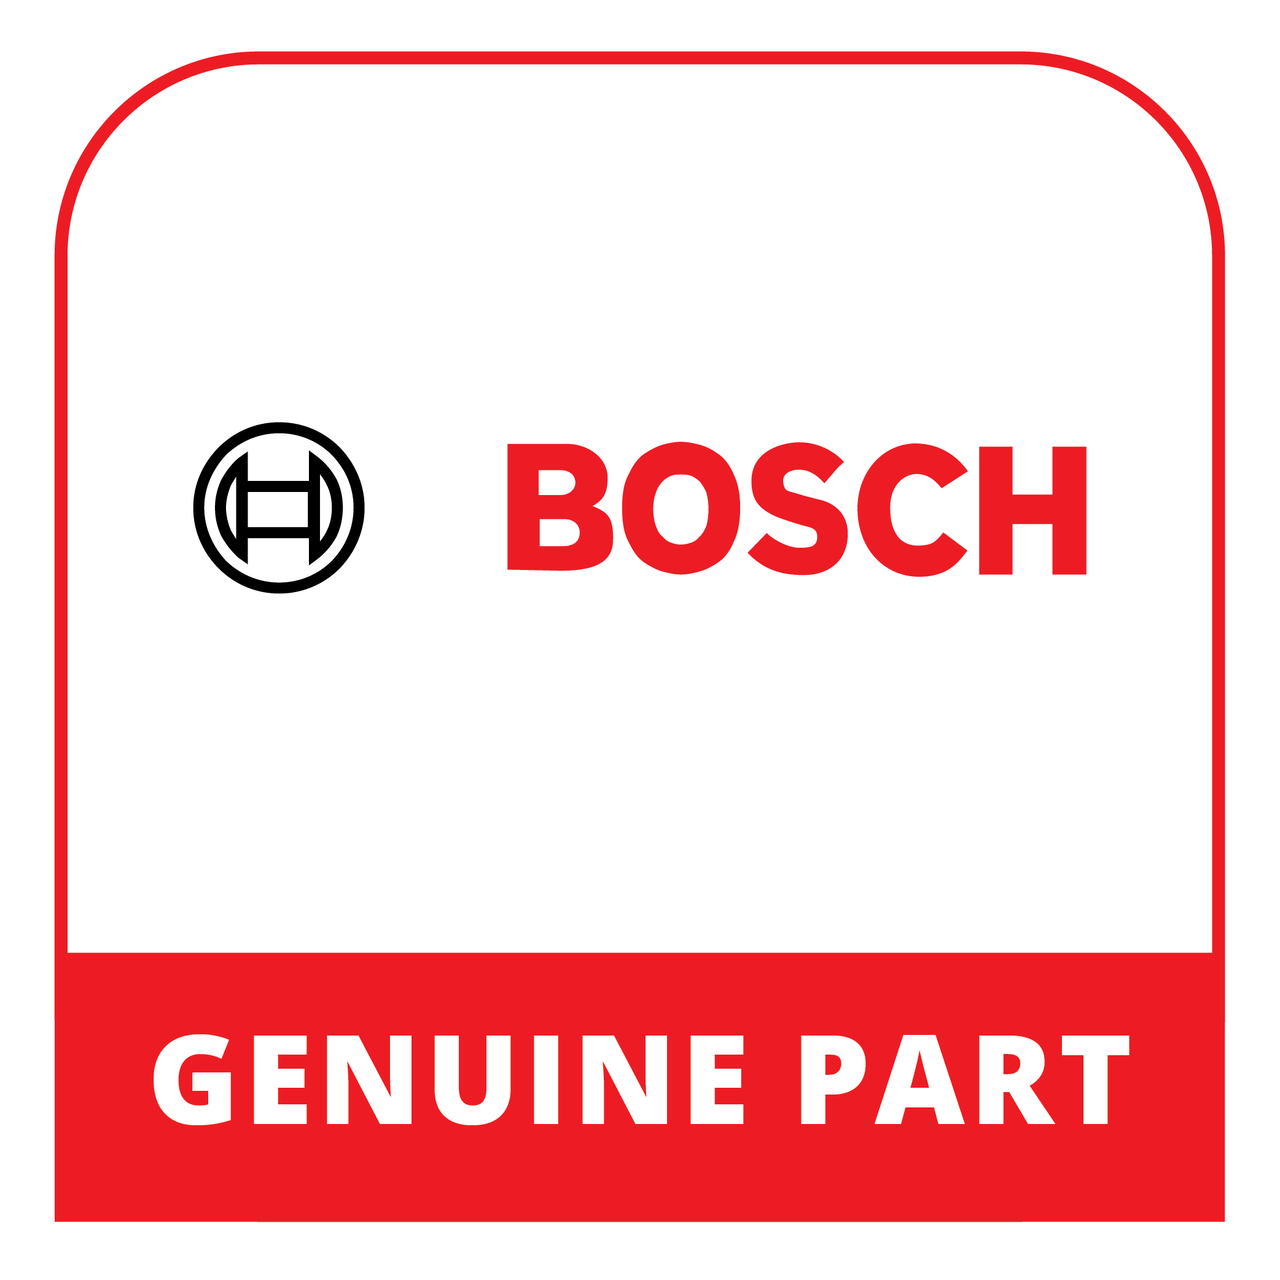 Bosch (Thermador) 10009320 - Screw - Genuine Bosch (Thermador) Part